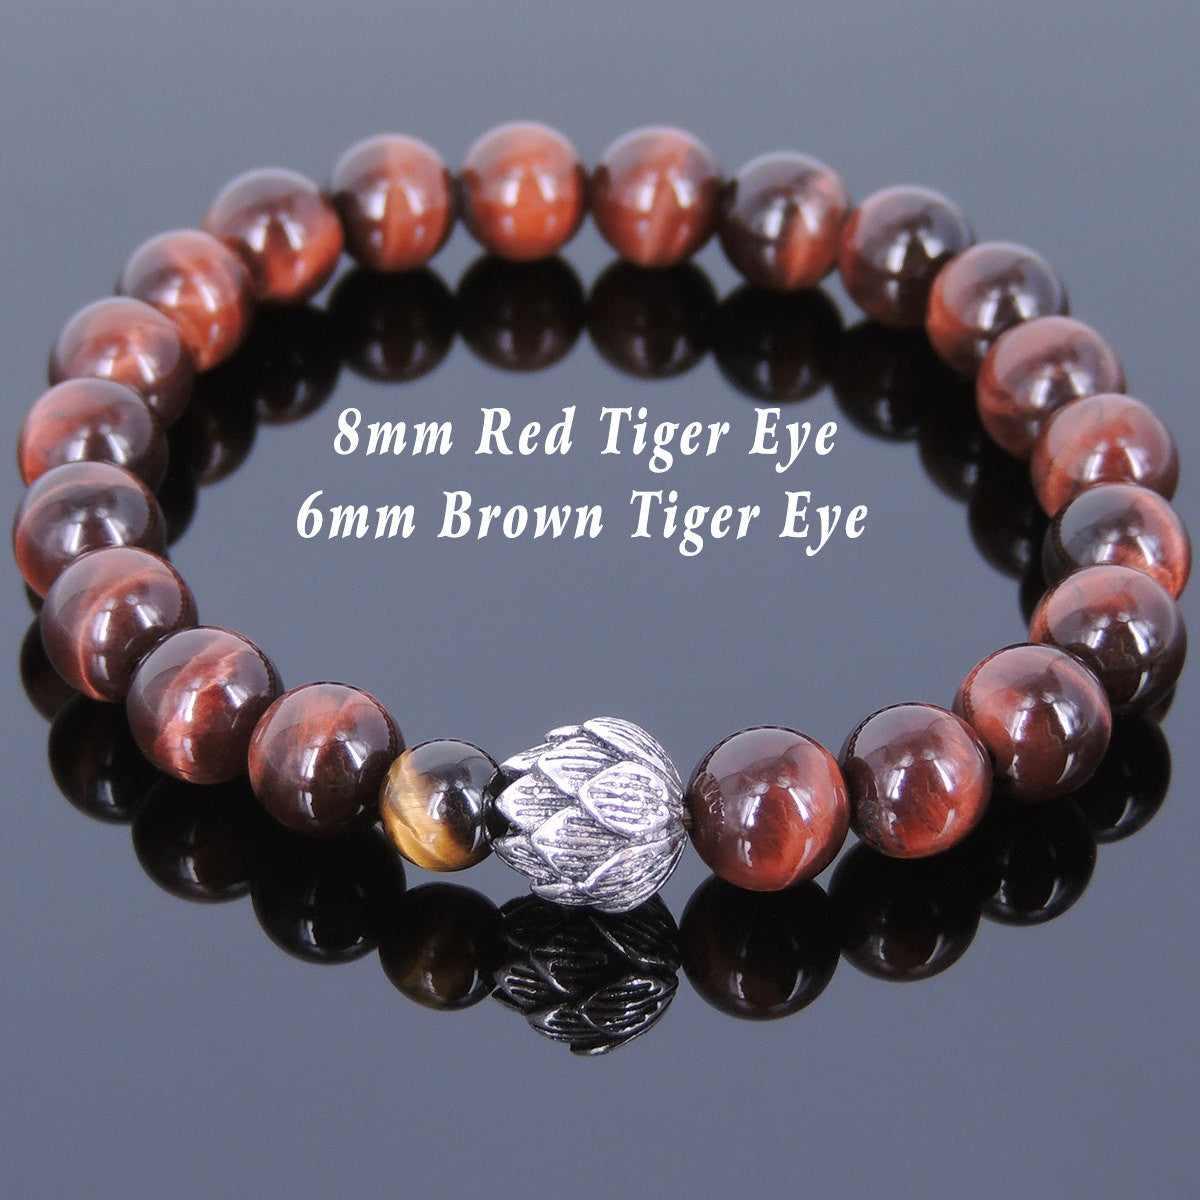 Red & Brown Tiger Eye Healing Gemstone Bracelet with S925 Genuine Sterling Silver Lotus Bead - Handmade by Gem & Silver TSB